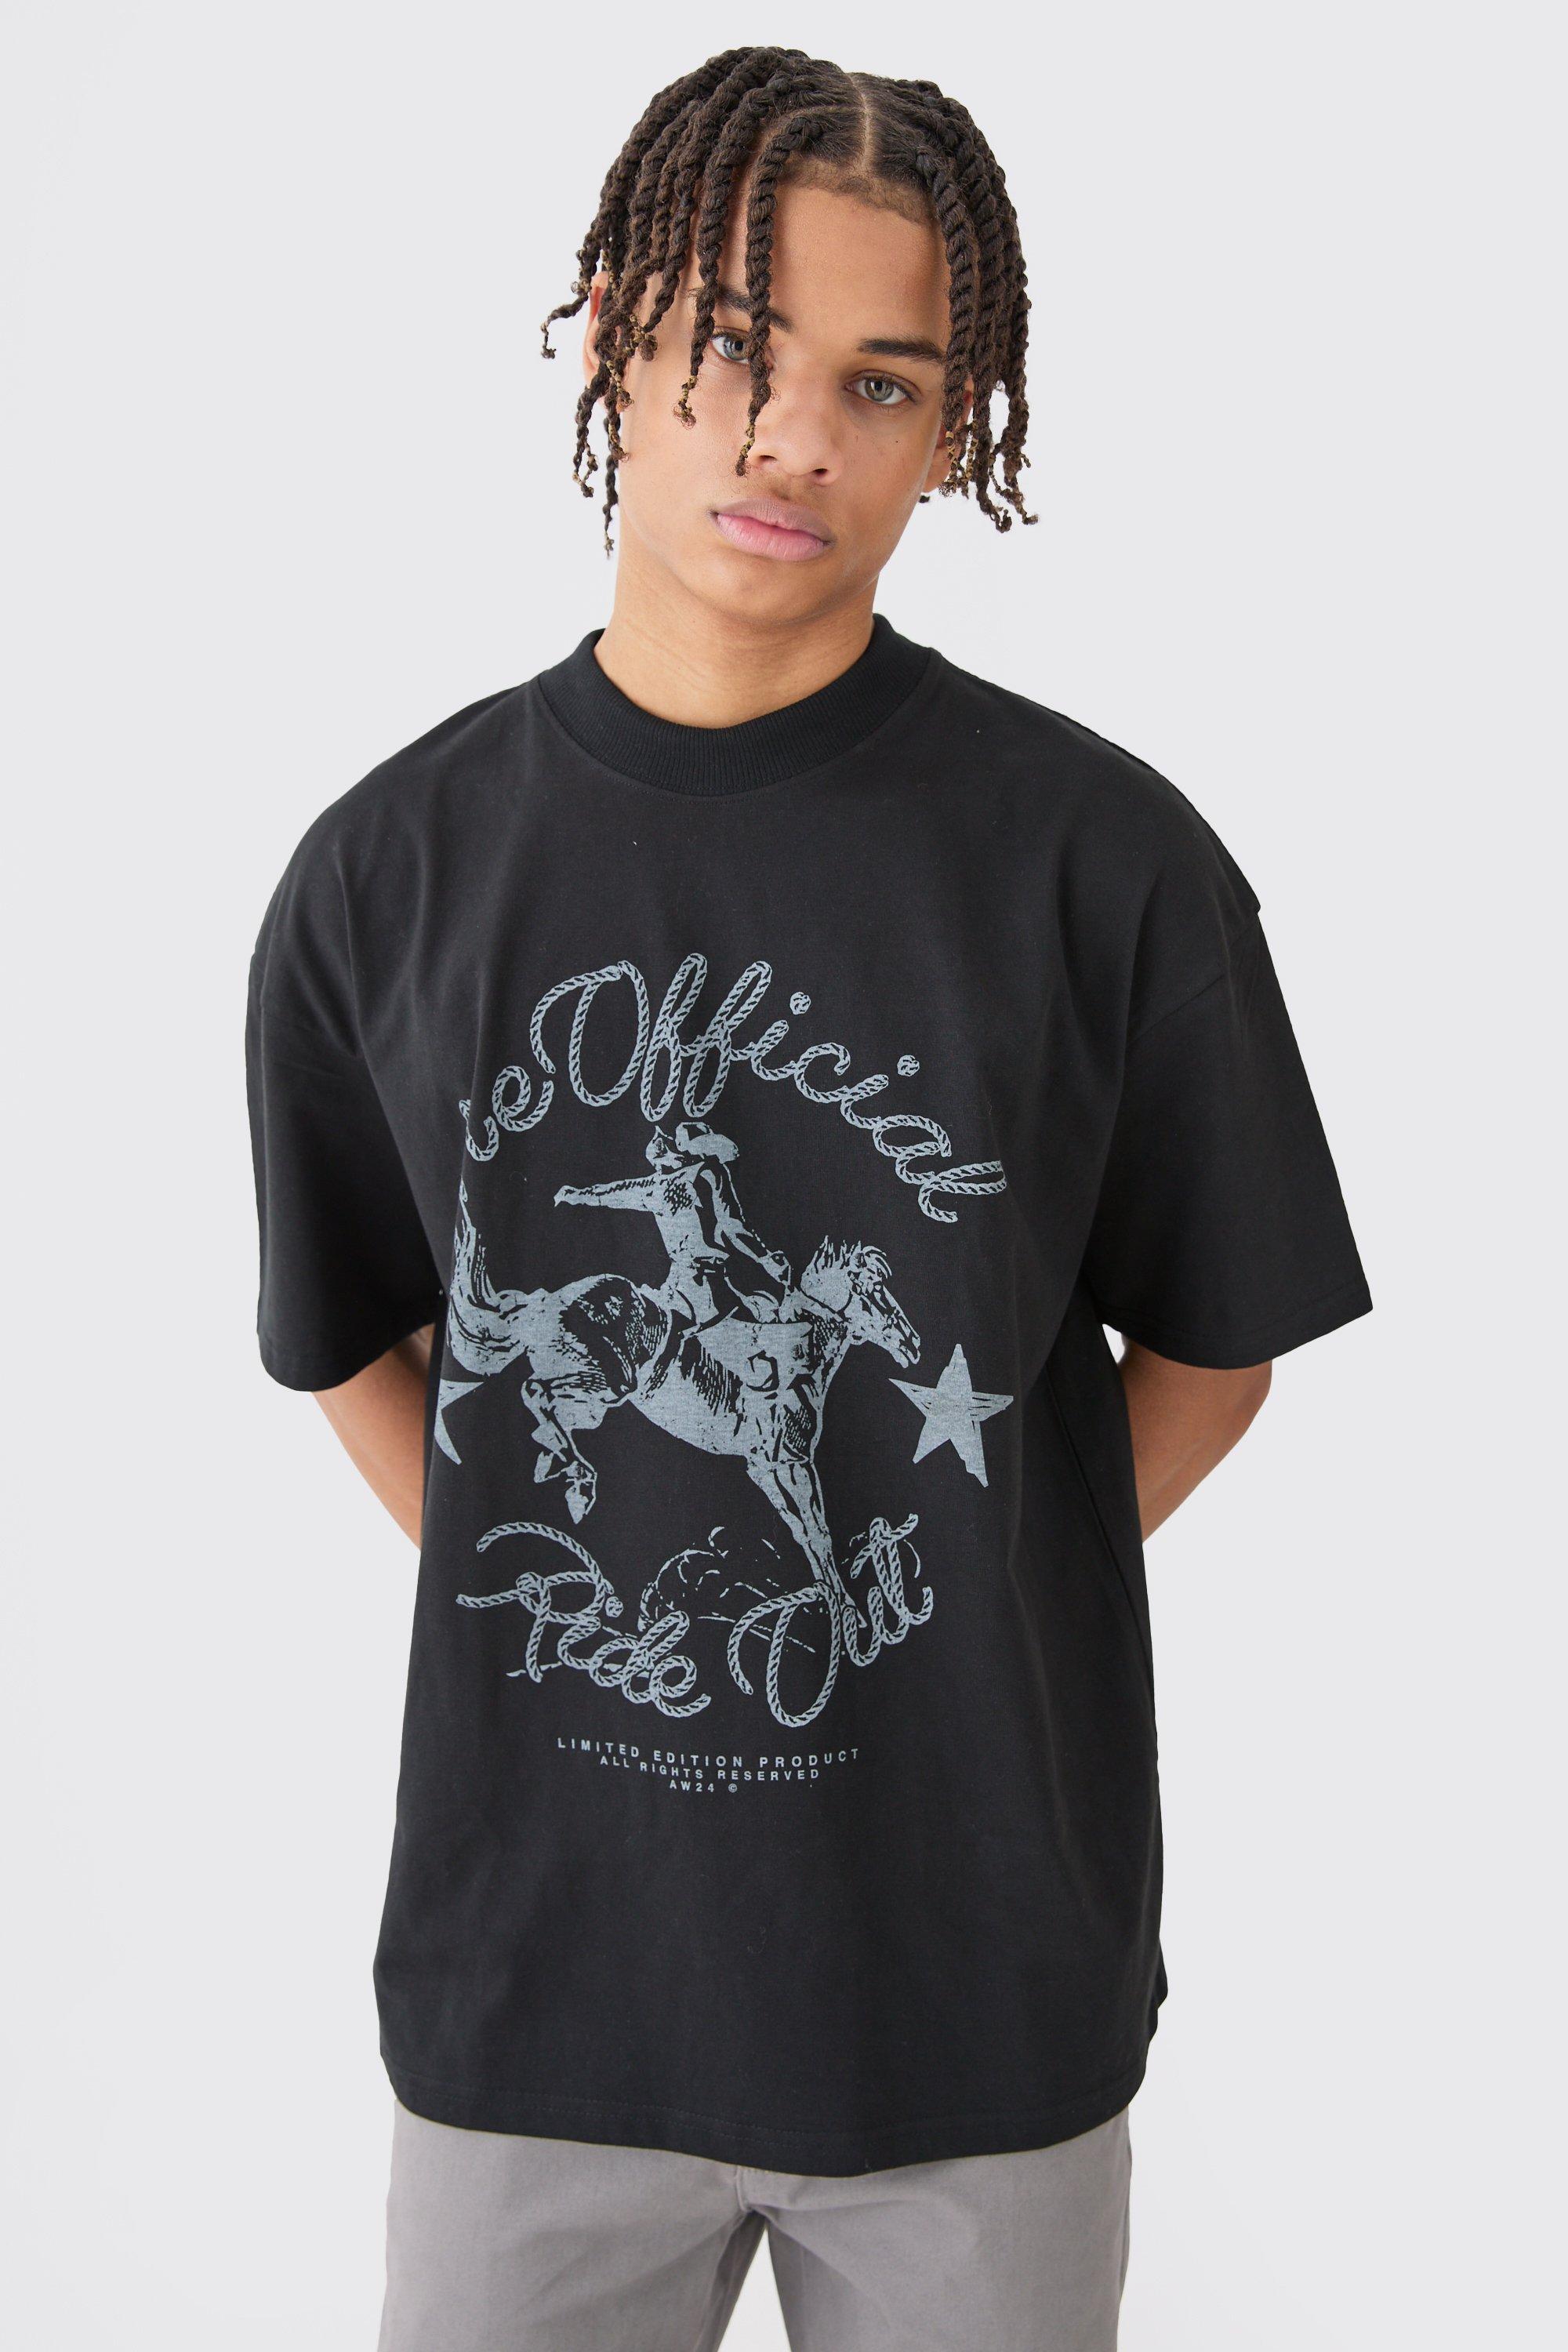 Womens Oversized Rodeo Graphic T-Shirt - Black - S, Black